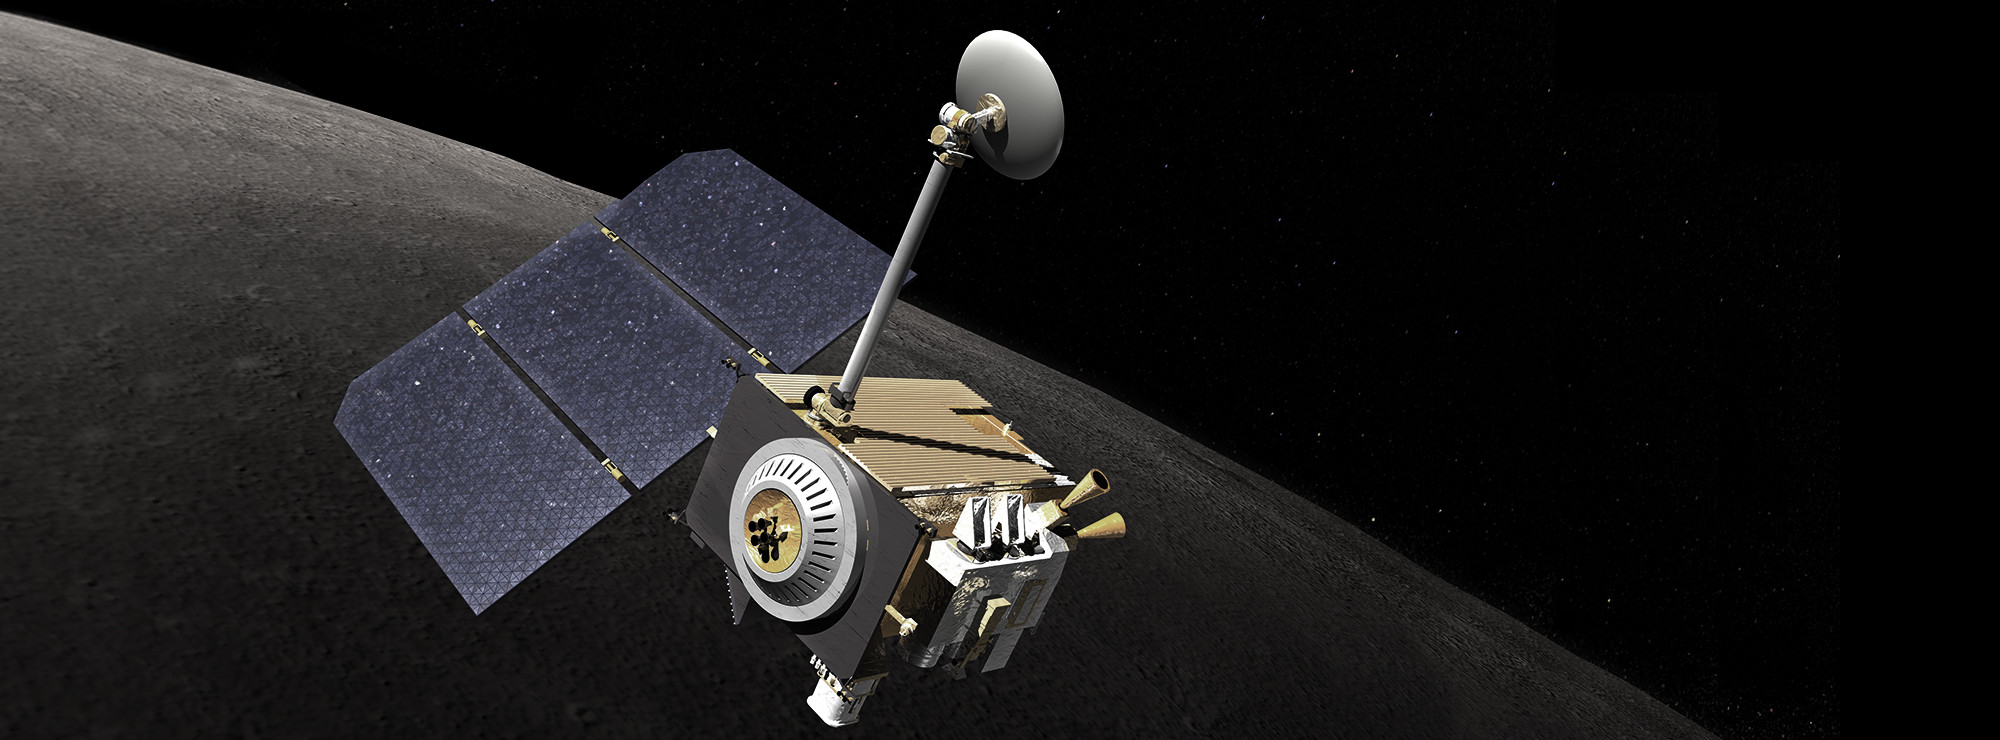 Lunar Reconnaissance Orbiter above the Moon.  Image: NASA - lunar.gsfc.nasa.gov